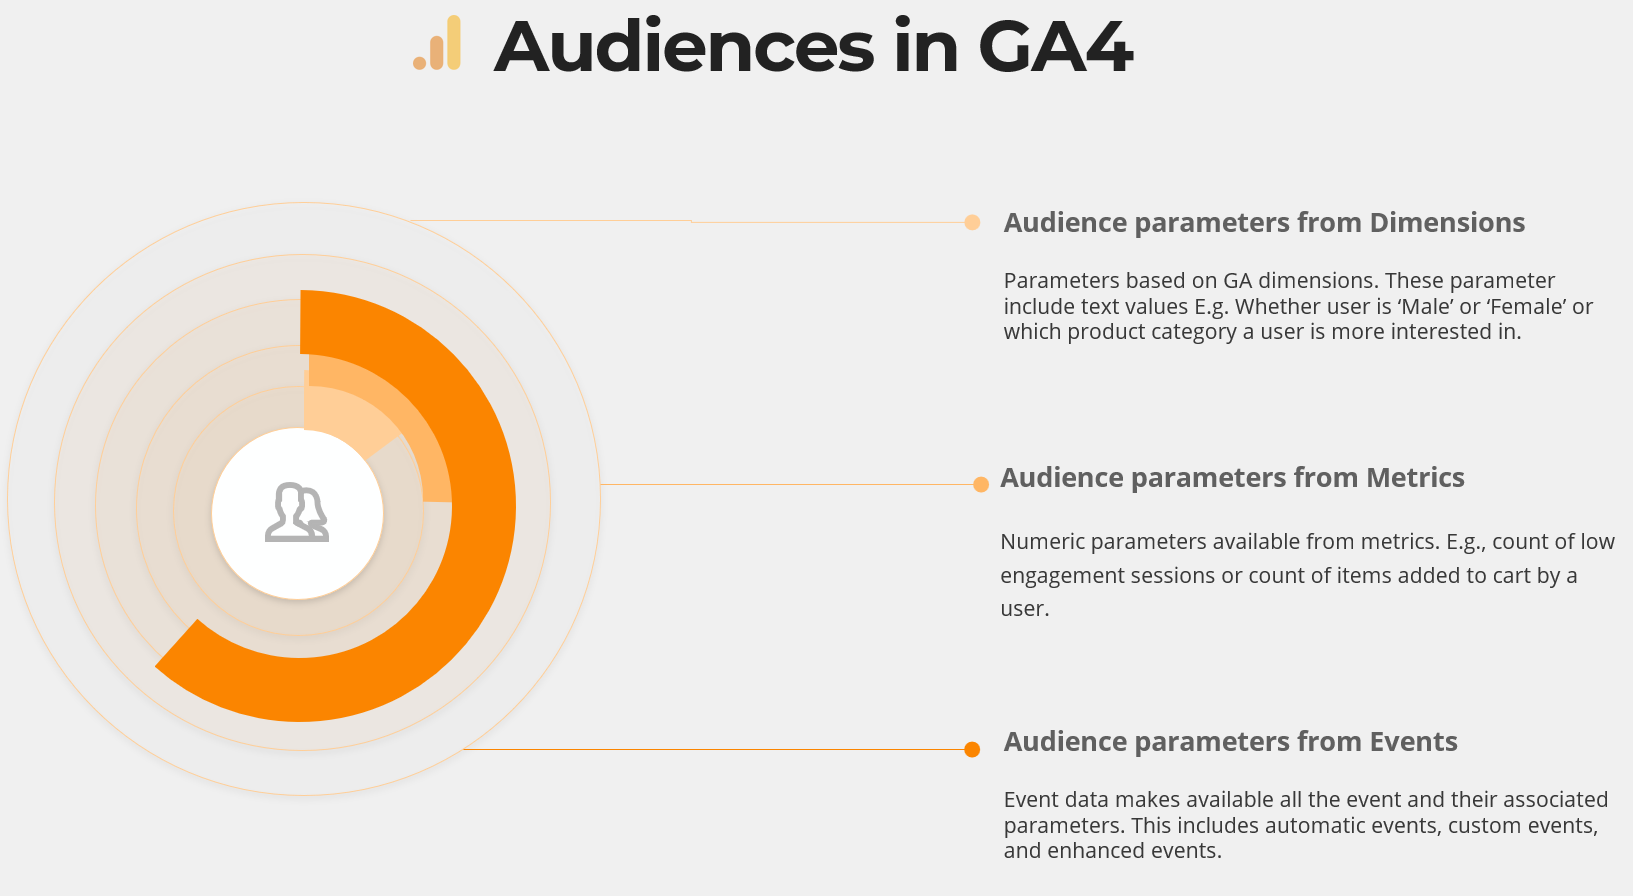 Audiences in Ga4